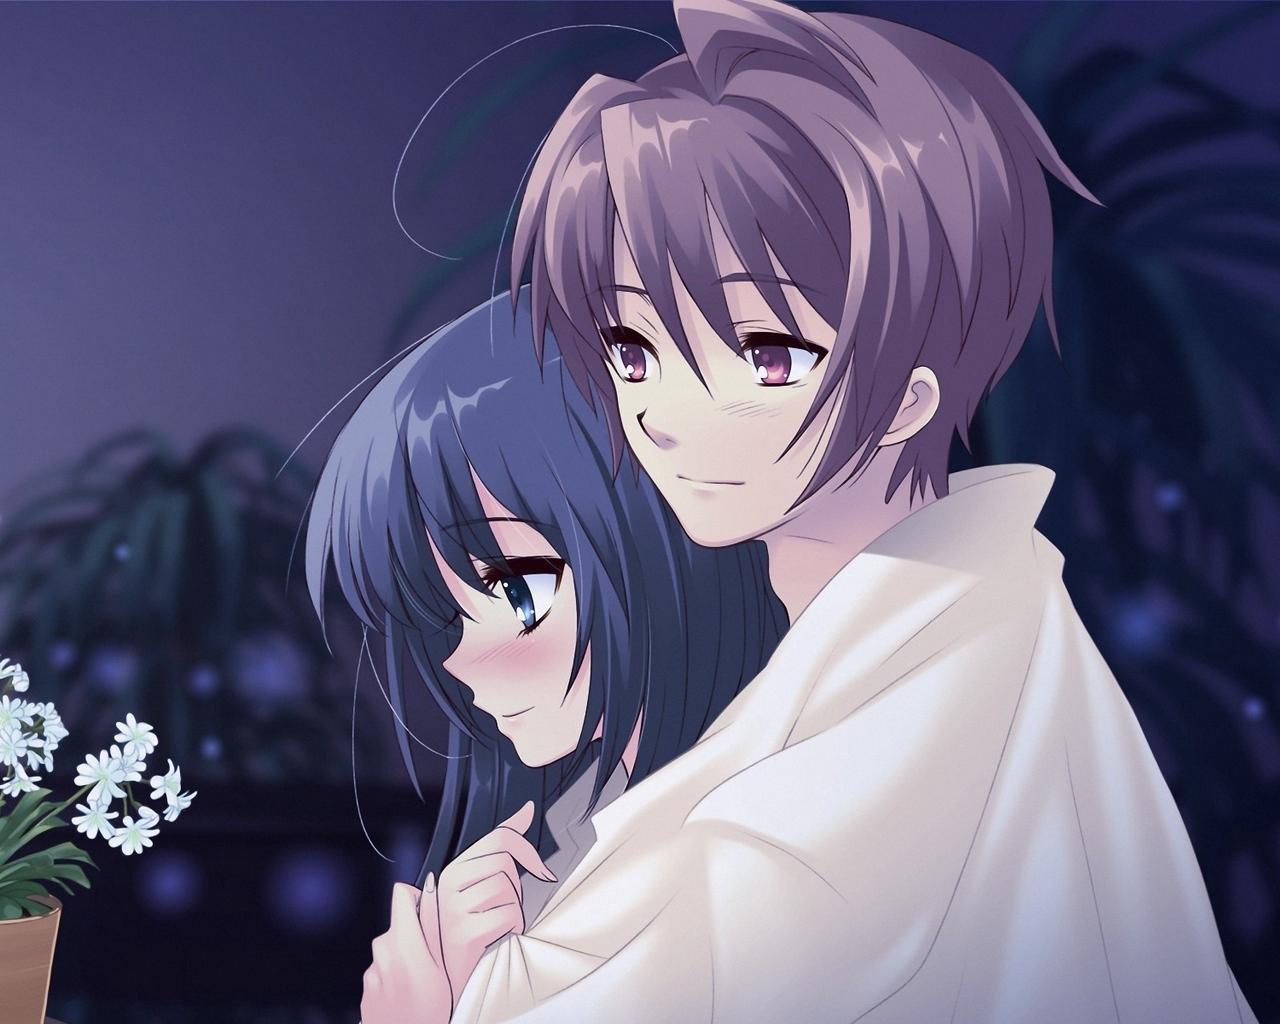 Download wallpapers 1280x1024 anime, boy, girl, pot, flower, hug, tenderness standard 5:4 hd backgrounds